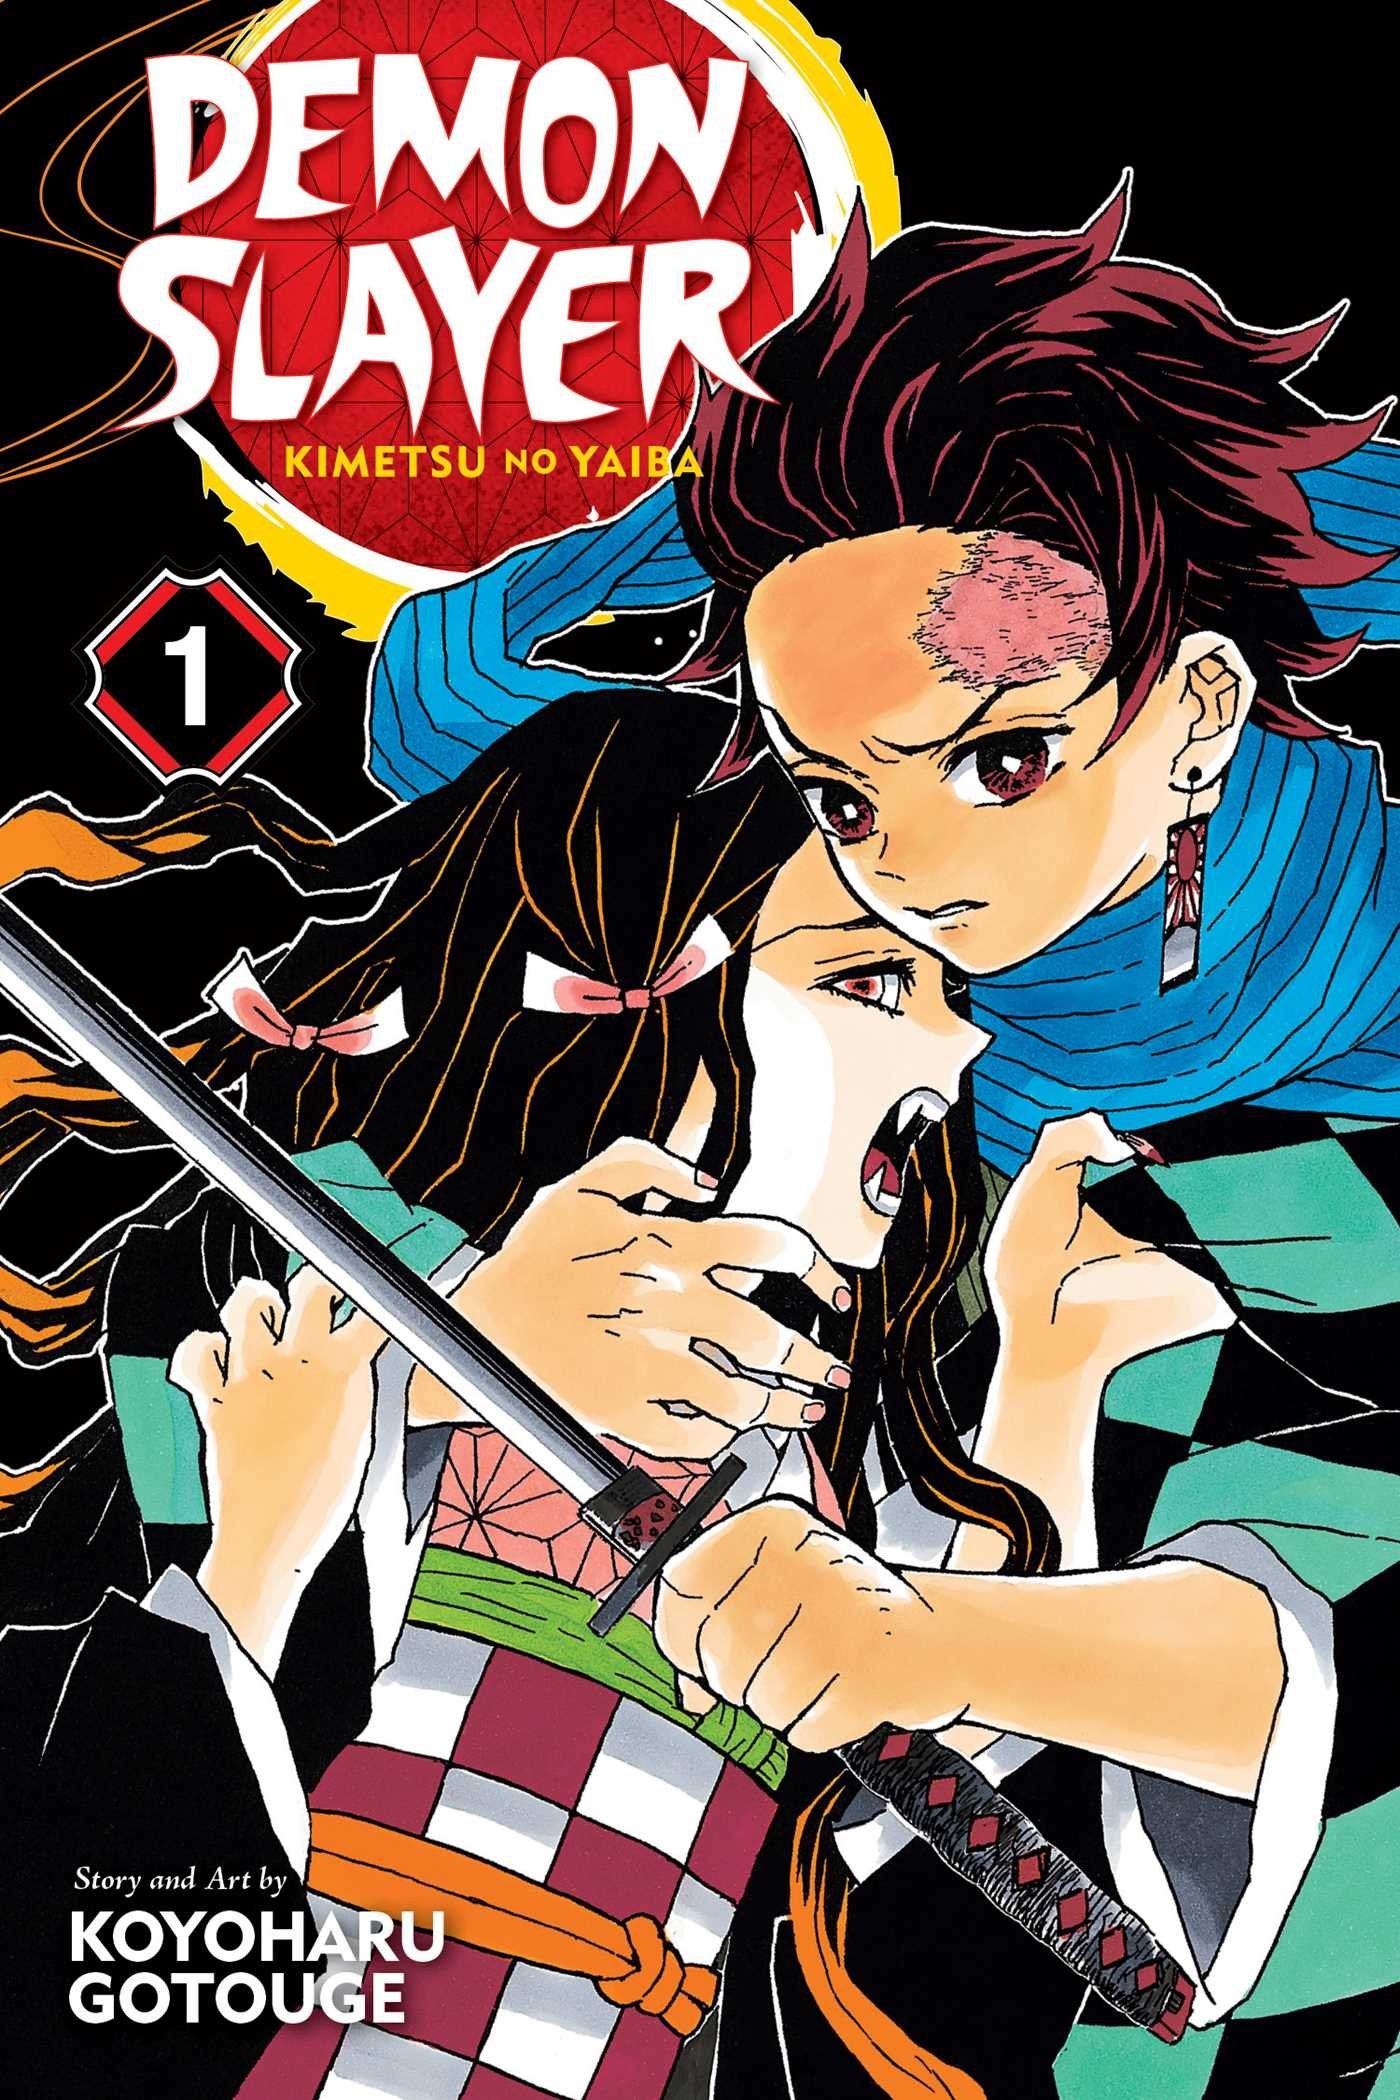 Kimetsu No Yaiba Manga Has More Than 150 Million Copies In Circulation Anime Sweet